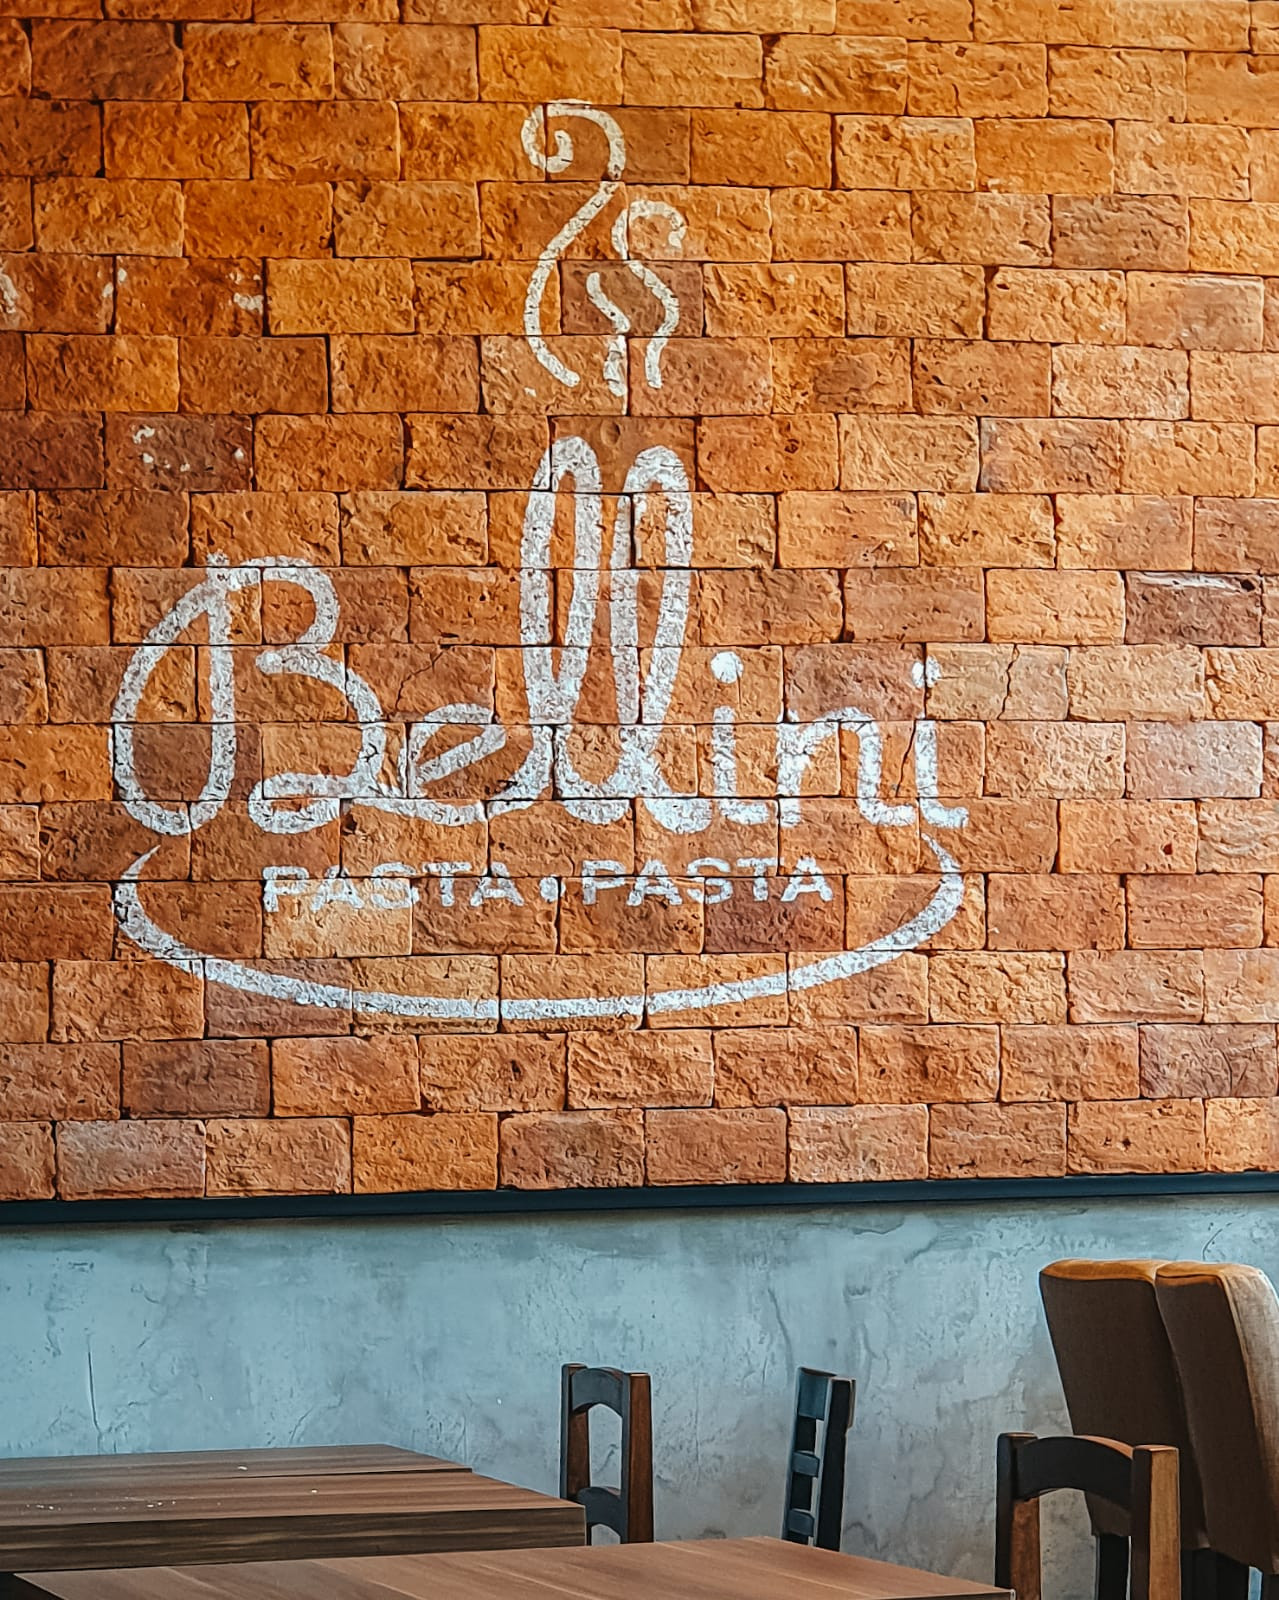 Bellini-pasta-gastronomía-almuerzo-multiplaza-shopping